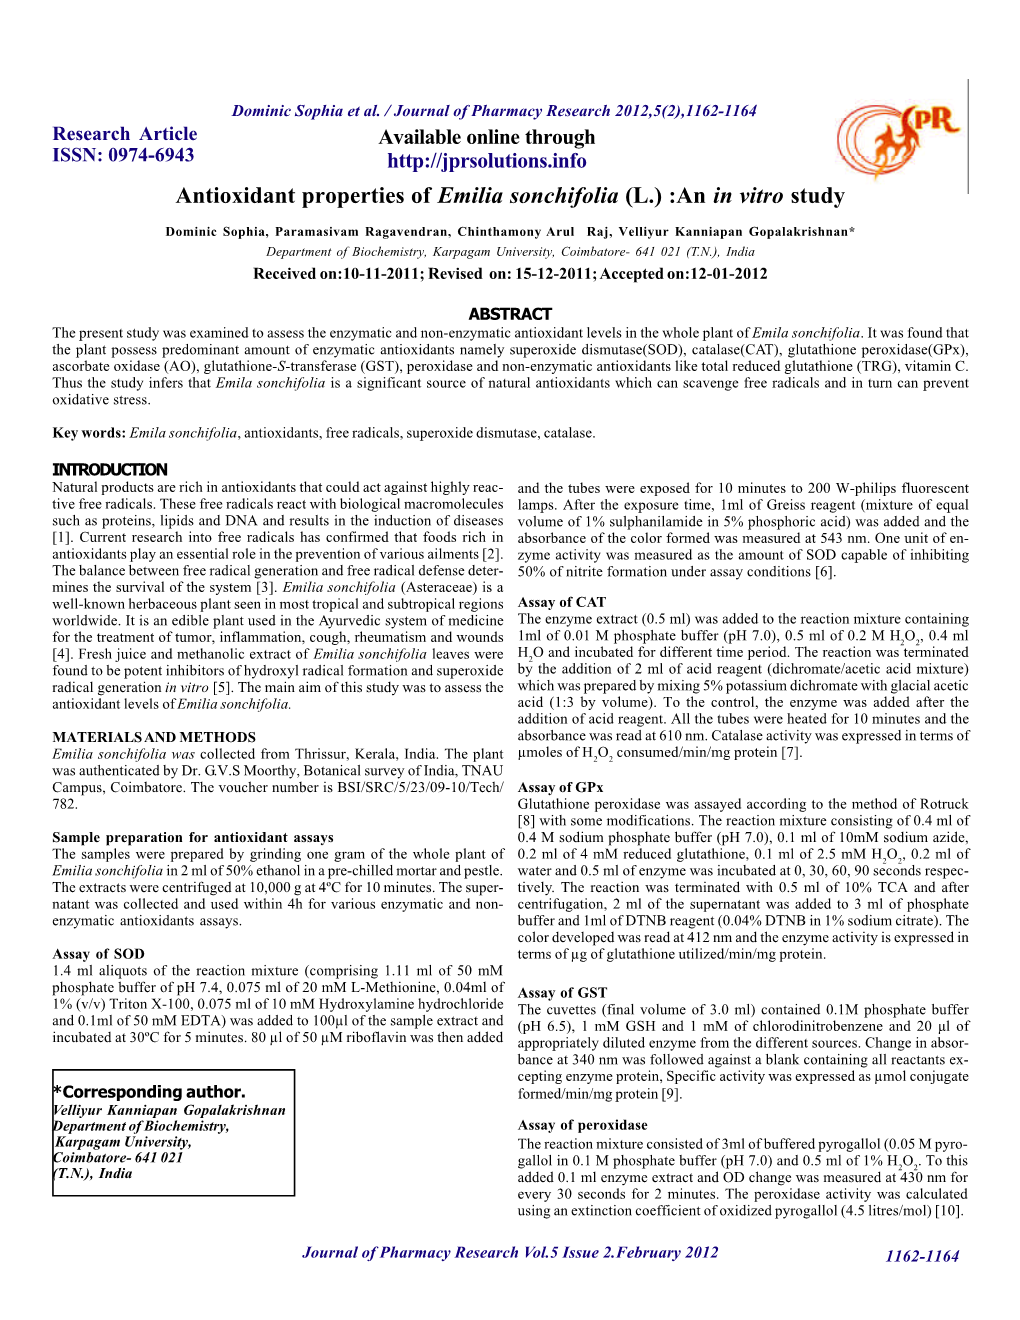 Antioxidant Properties of Emilia Sonchifolia (L.) :An in Vitro Study